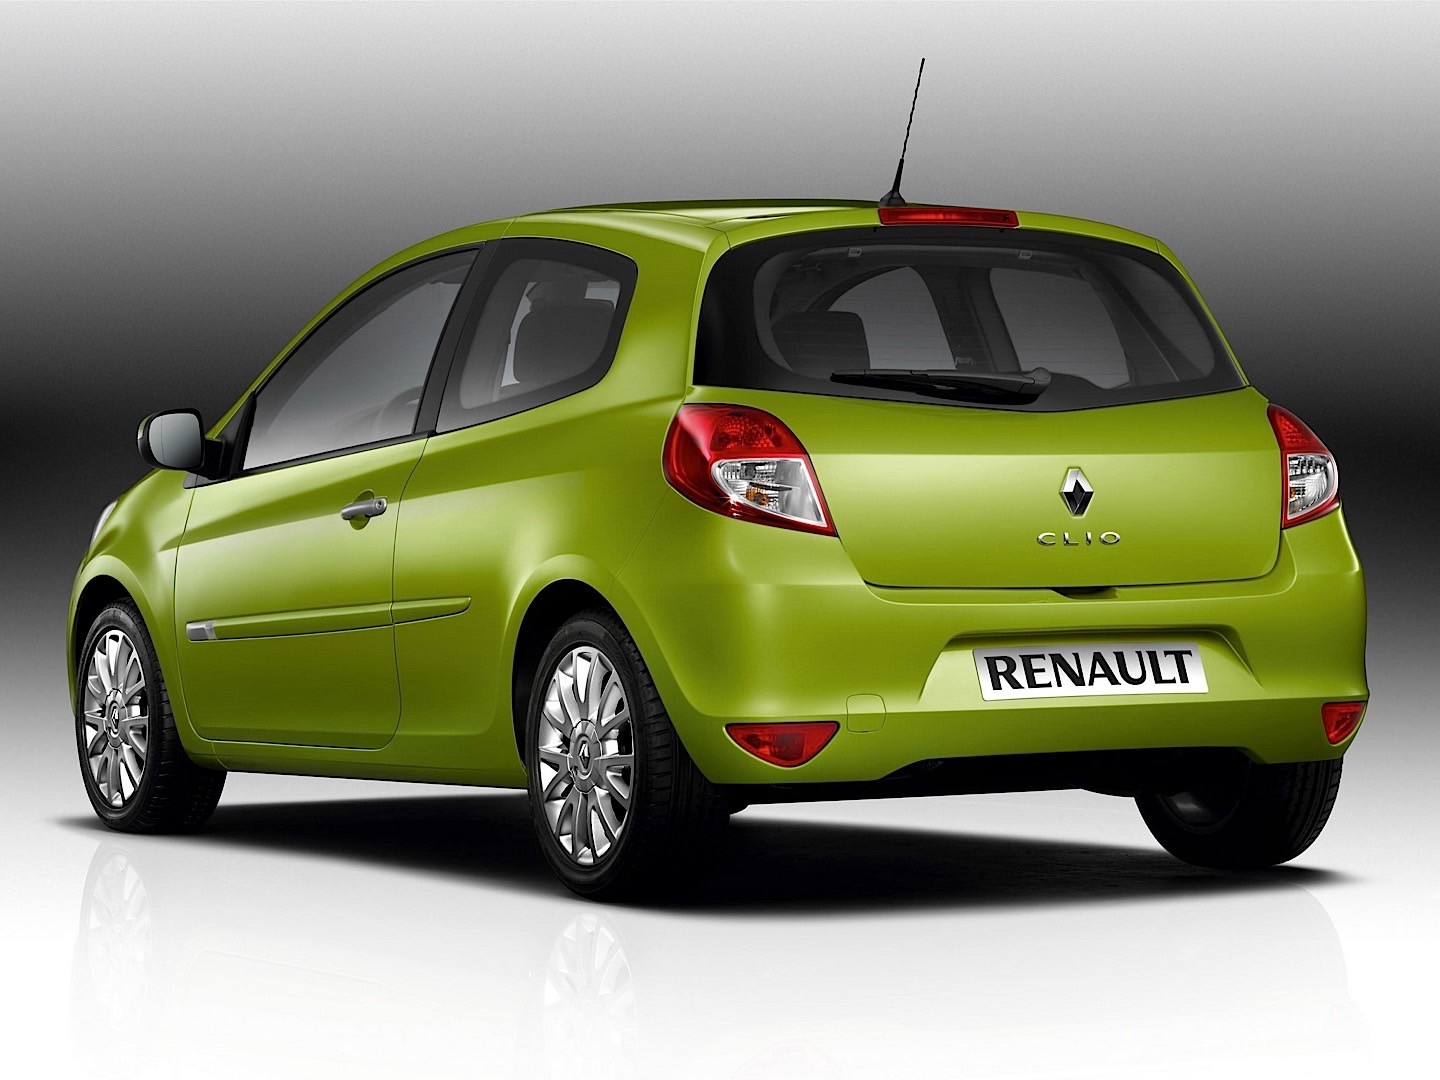 RENAULT Clio 3 Doors 2009, 2010, 2011, 2012 autoevolution